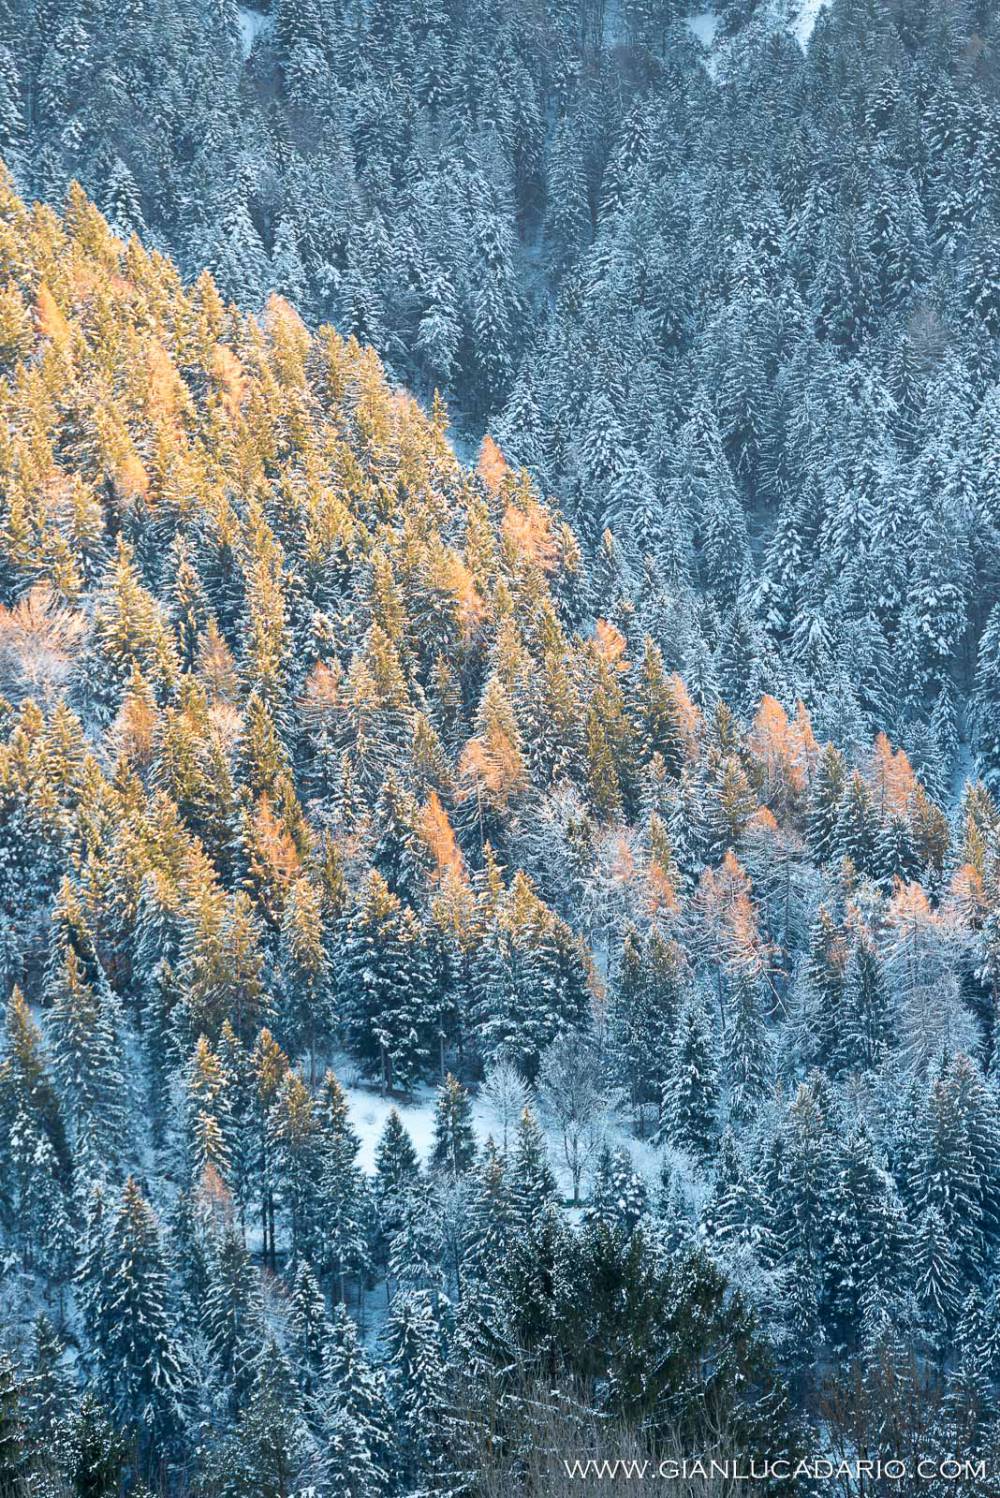 Panorami invernali a Calalzo - foto 14 - Gianluca Dario Photography